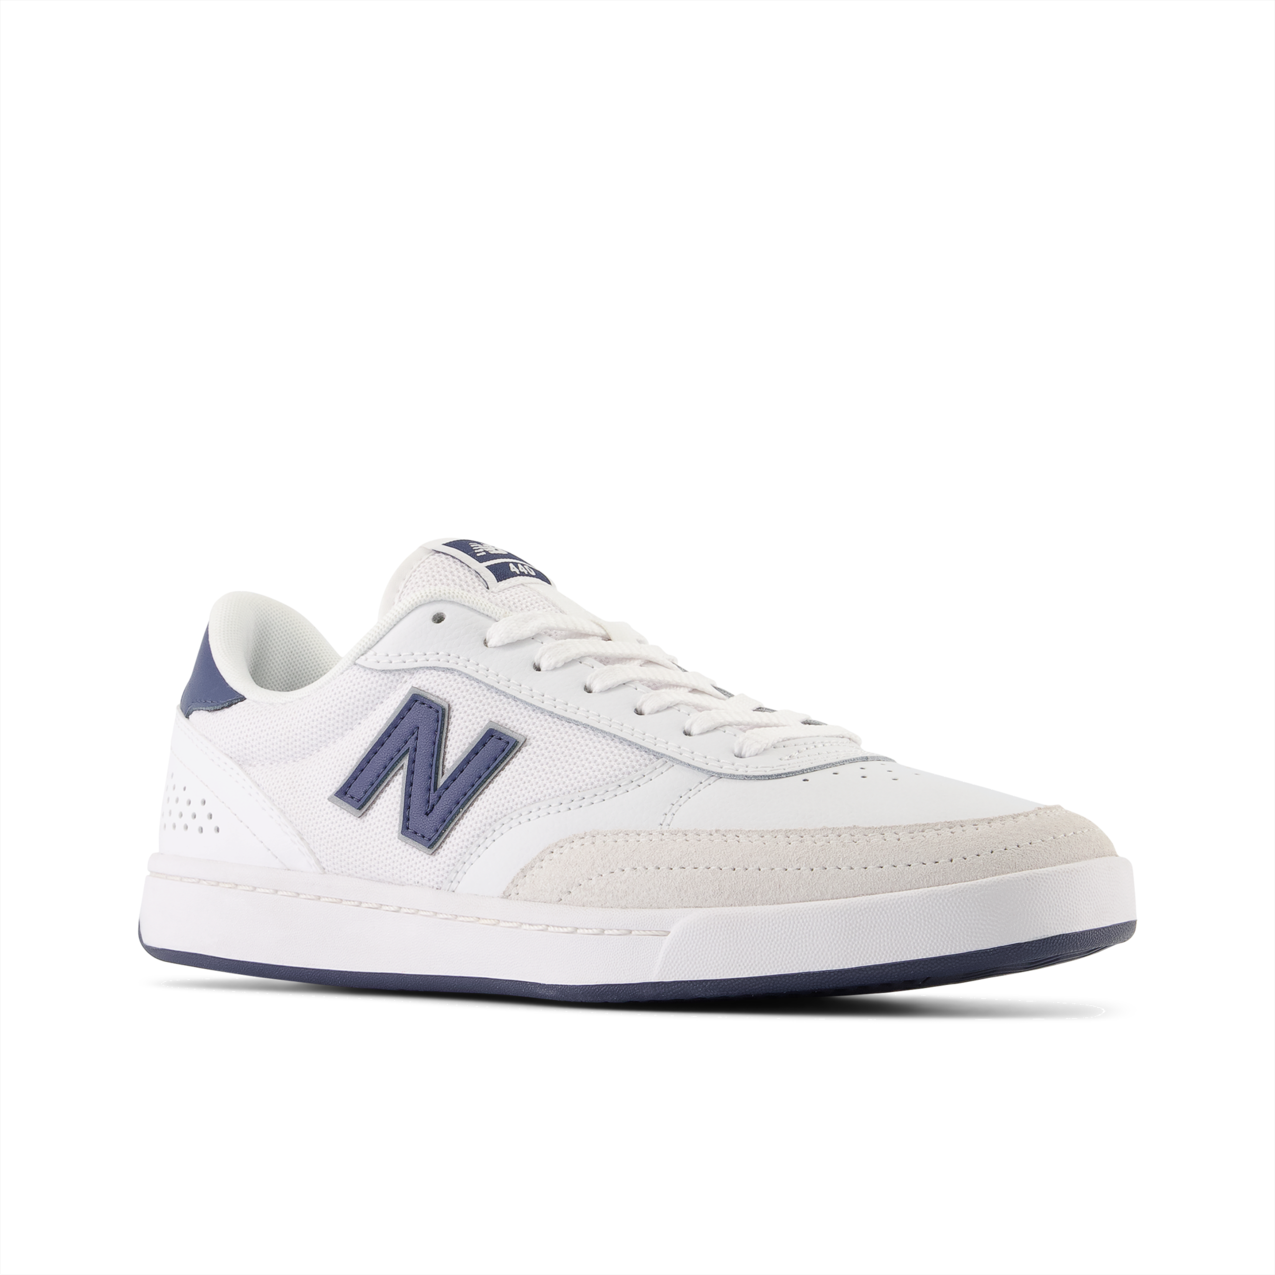 New Balance Numeric Men's 440 White Navy Shoes